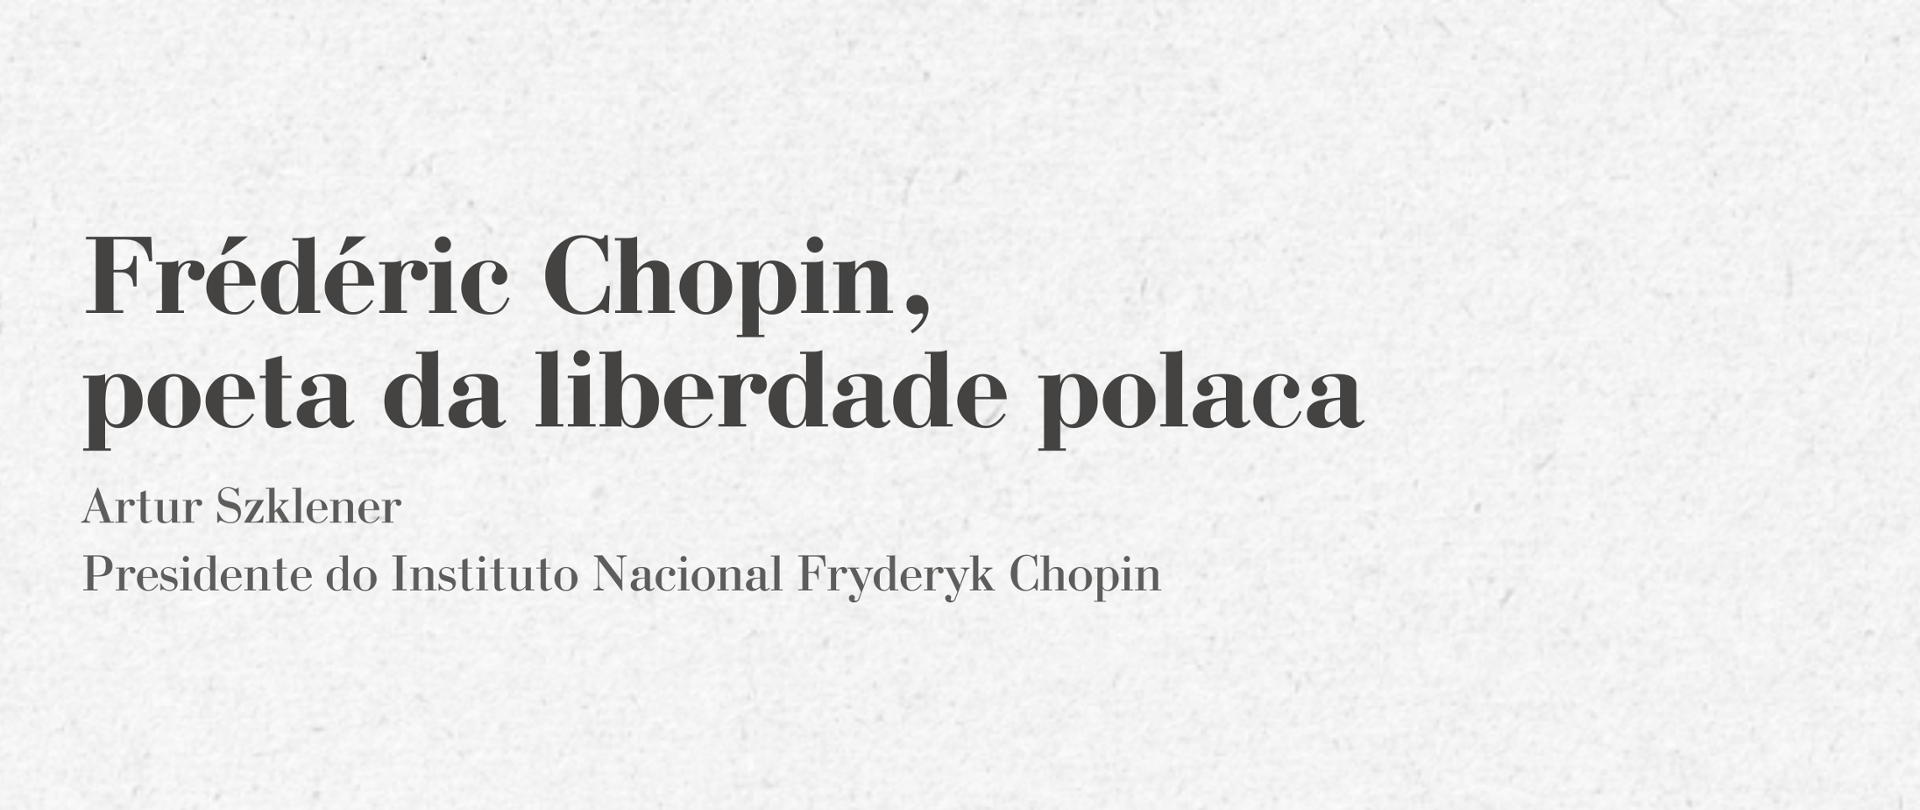 Frédéric Chopin, poeta da liberdade polaca